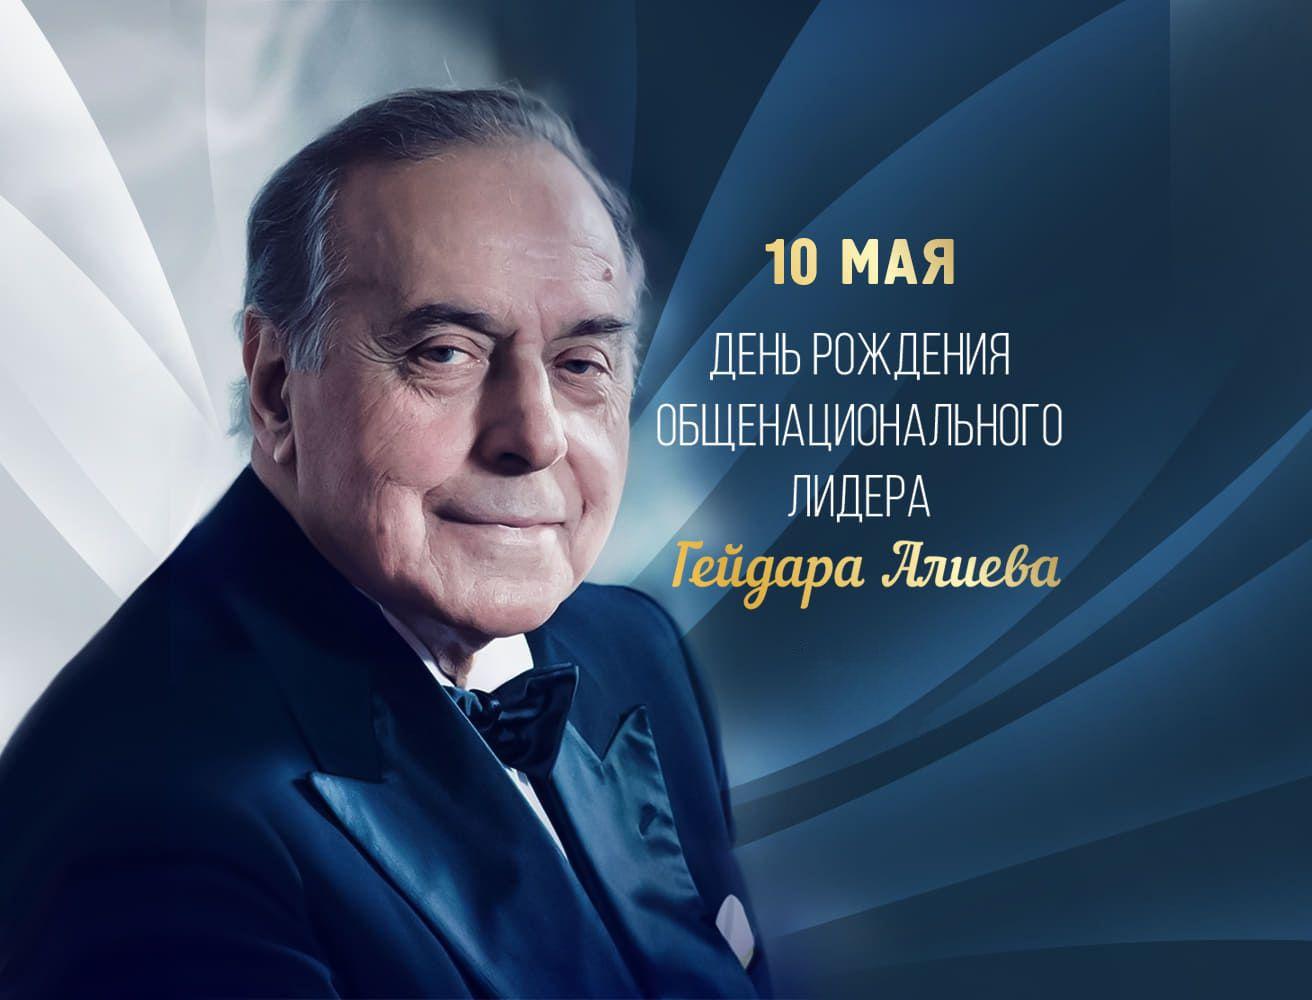 101st Anniversary of Heydar Aliyev's Birth: Architect of Modern Azerbaijan Republic